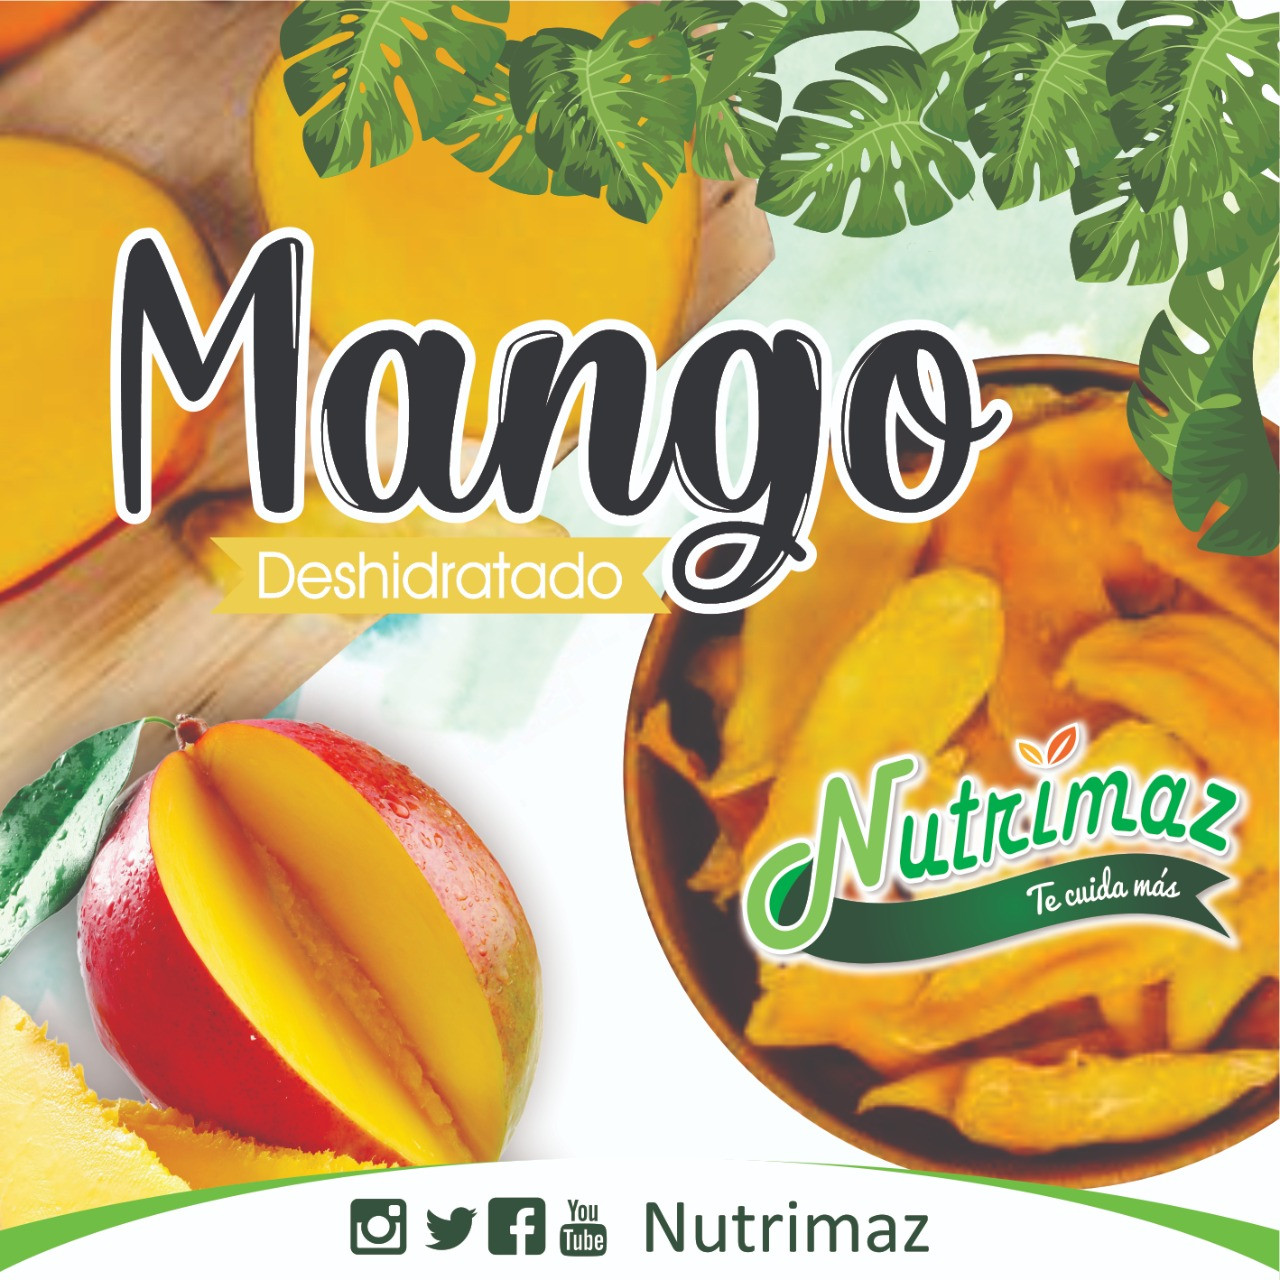 Imagen Mango deshidratado Nutrimaz 30 g 2